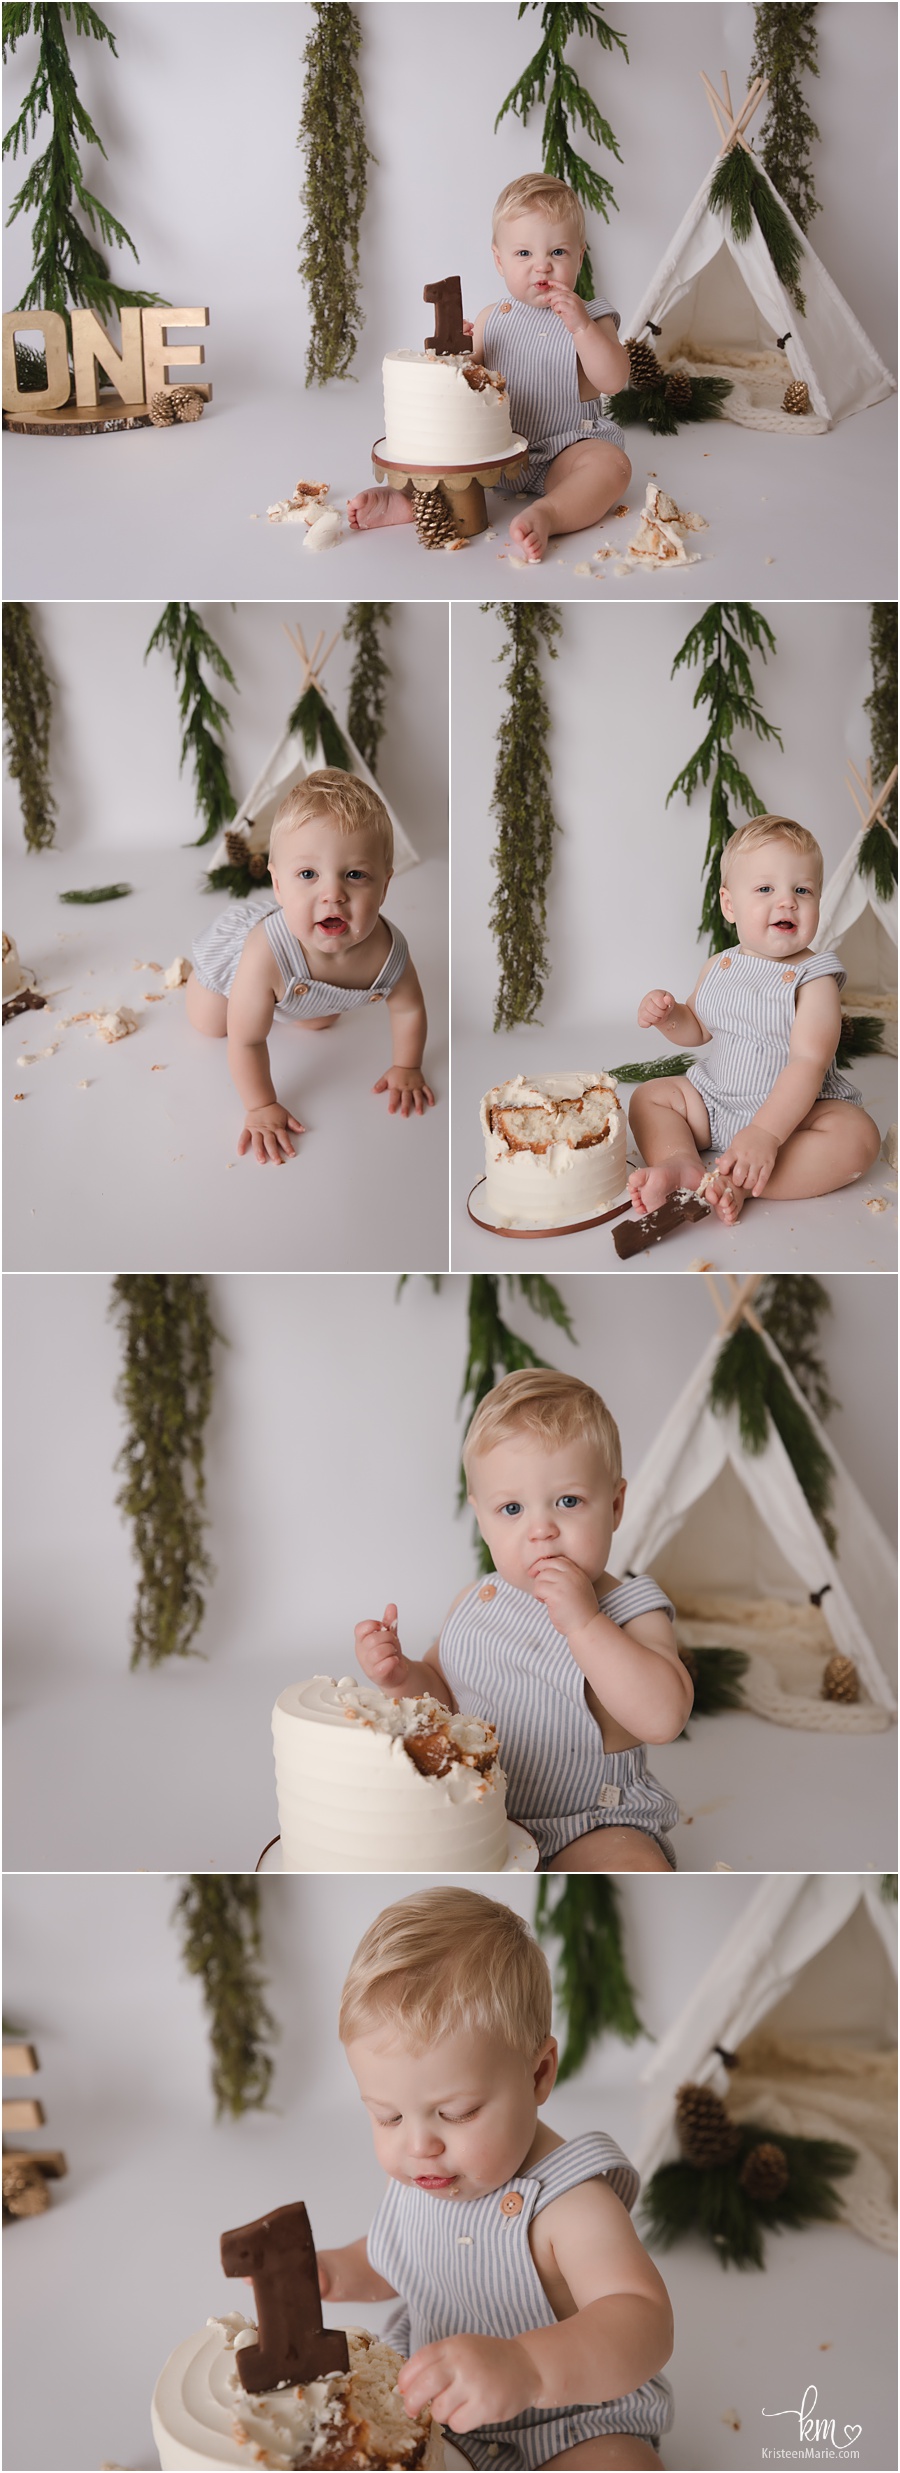 evergreen cake smash set-up for baby's 1st birthday